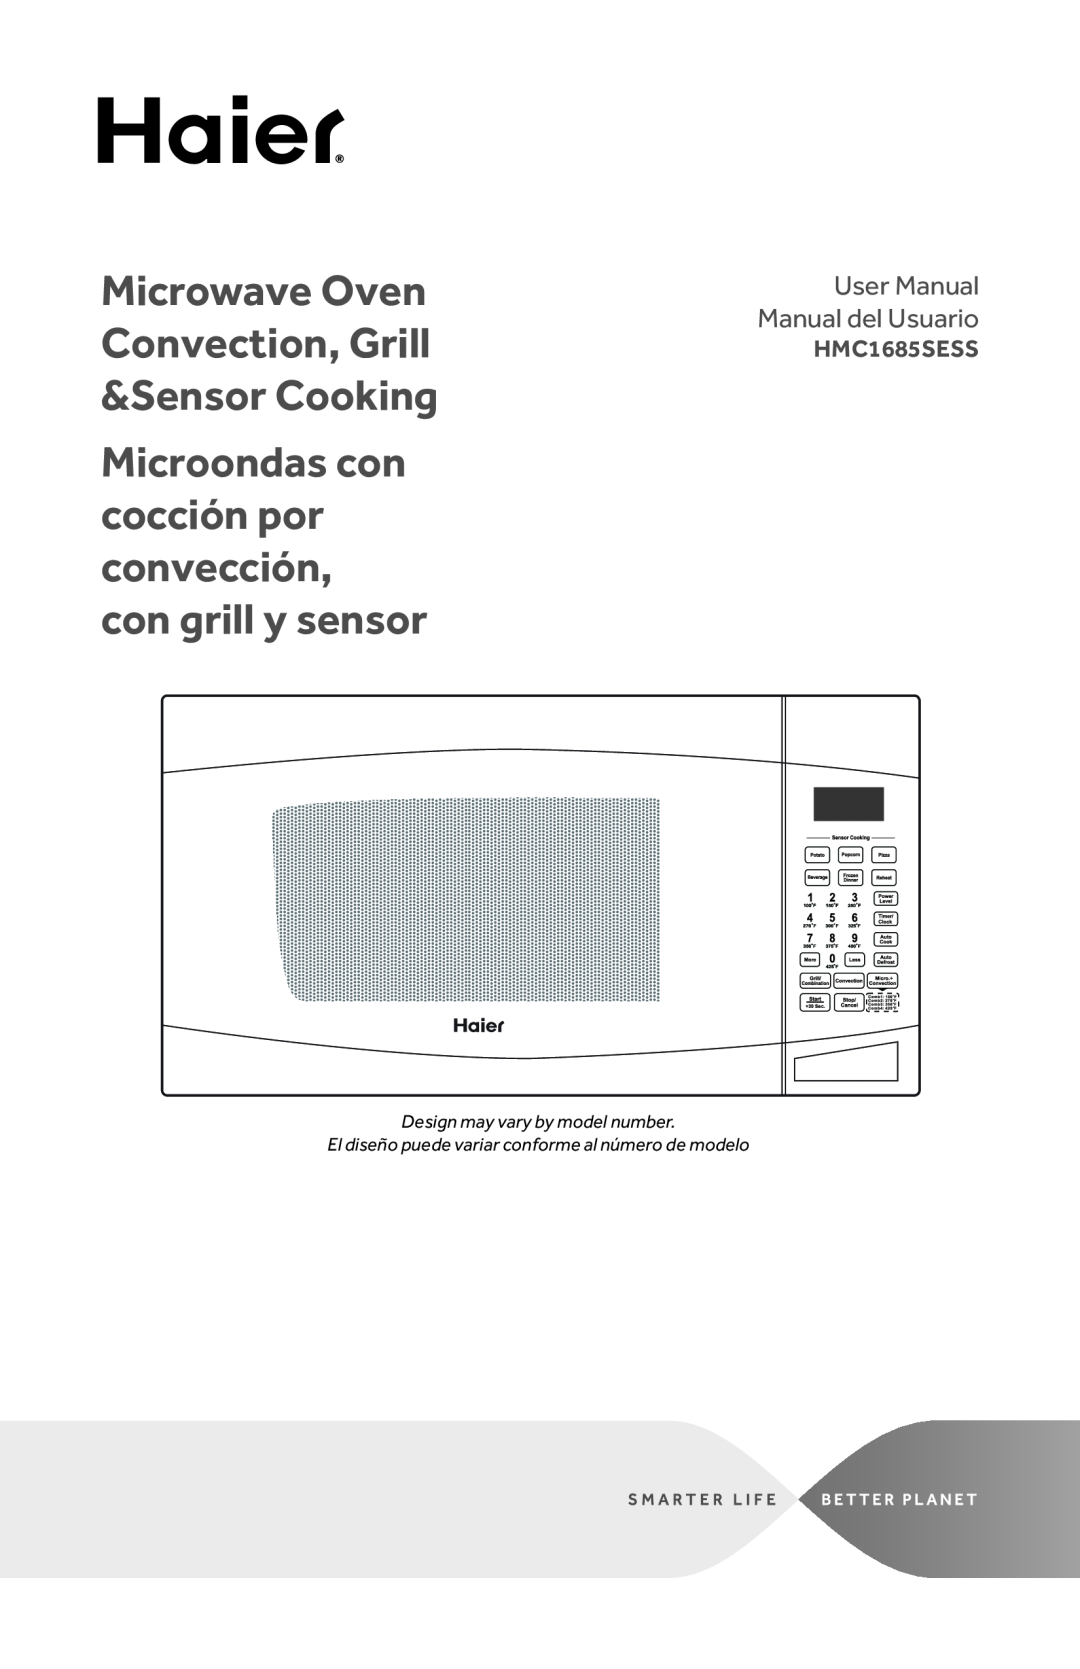 Haier HMC1685SESS user manual Microwave Oven Convection, Grill &Sensor Cooking, User Manual Manual del Usuario 